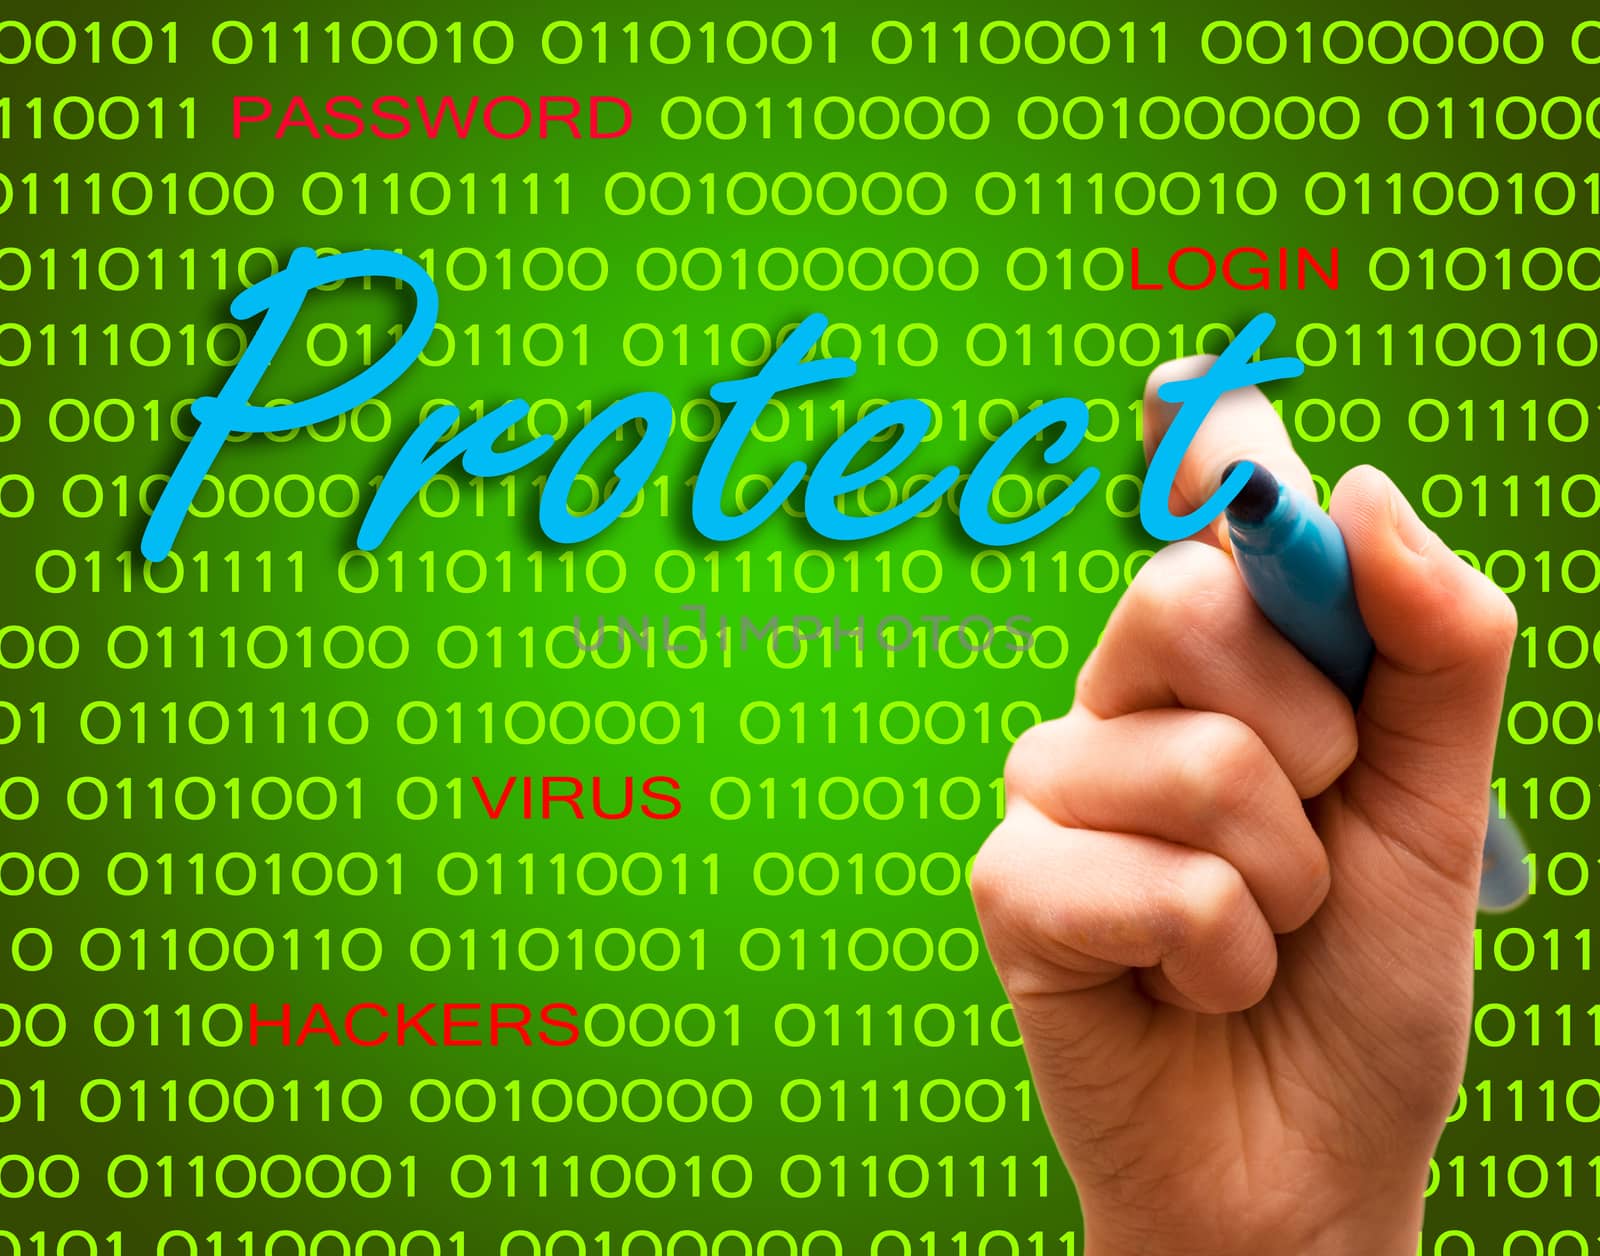 Protect password login virus hackers hand binary text by Havana